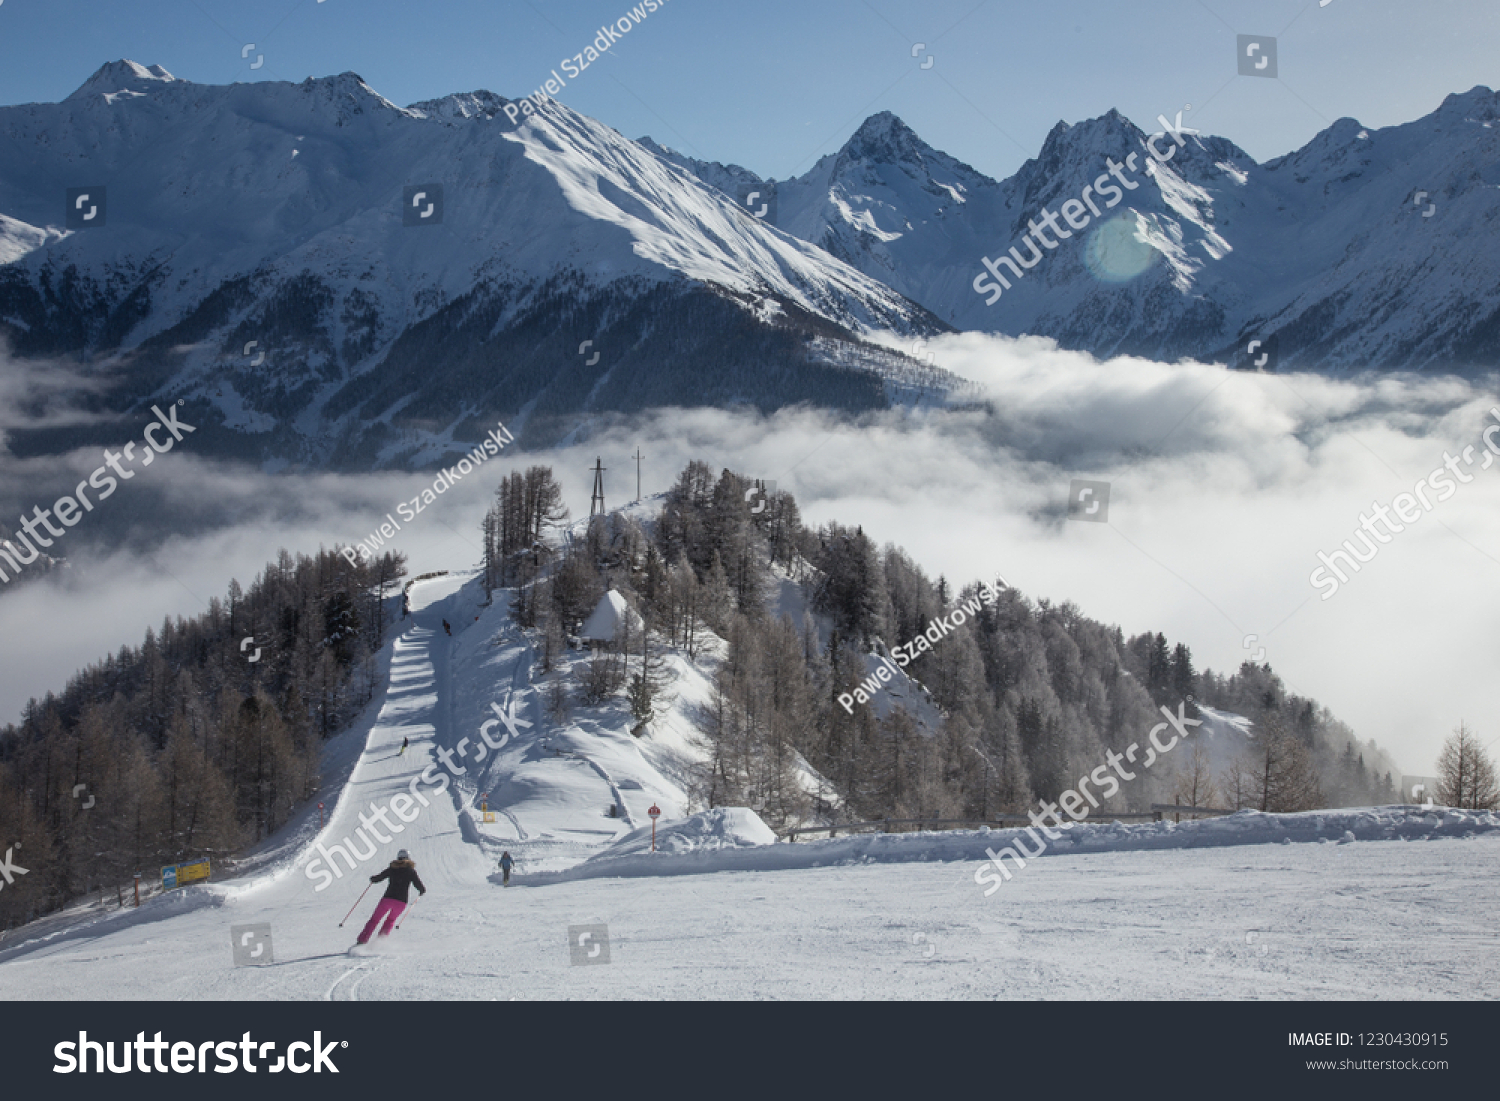 Matrei in Osttirol, Grossglockner Resort, Austria. Snowy ski slope. Skiers on the slope. Mountains in the background. #1230430915